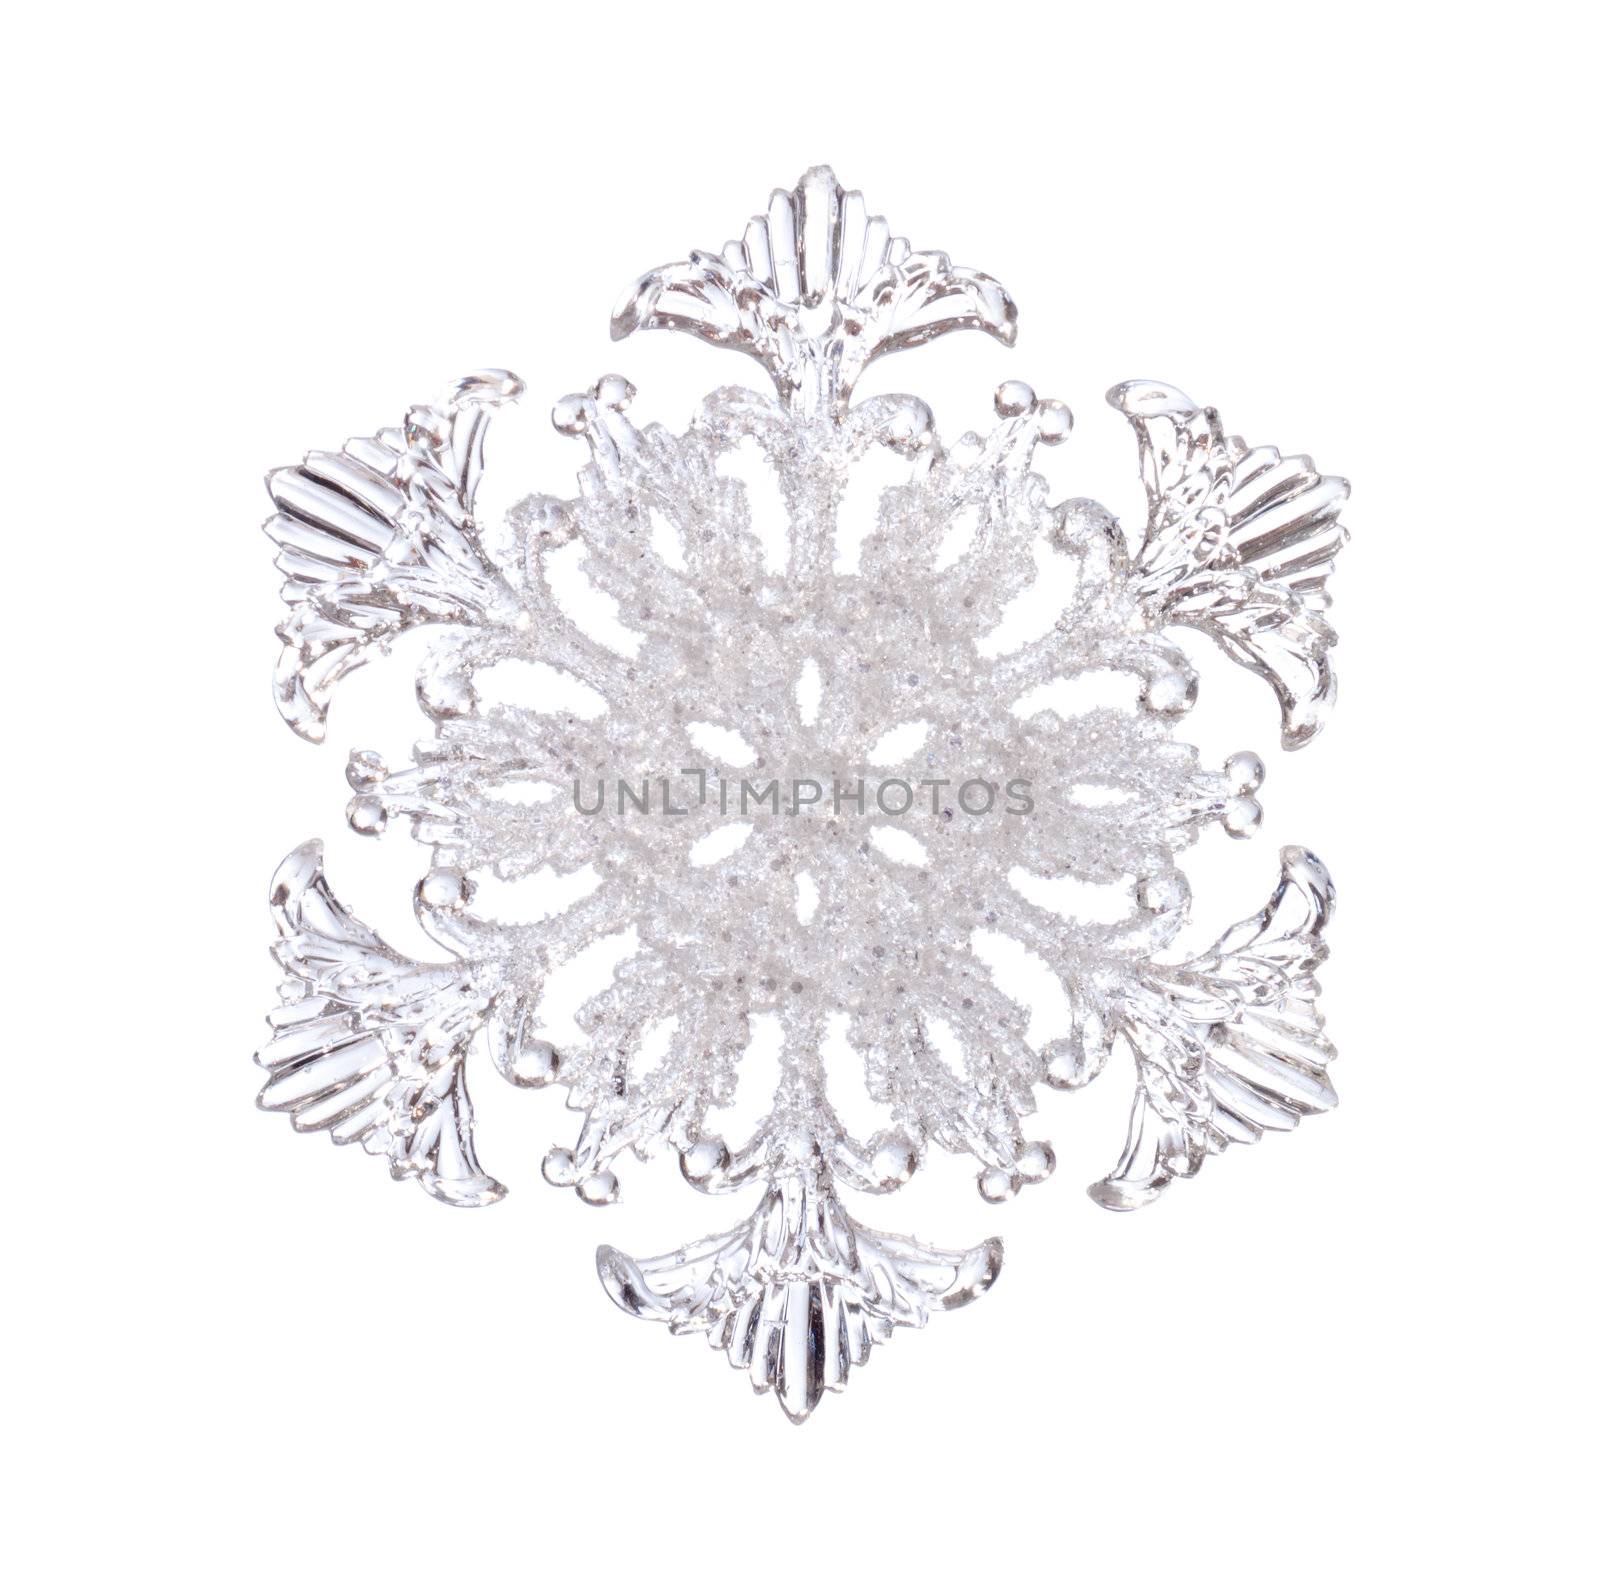 Snowflake shape by aguirre_mar